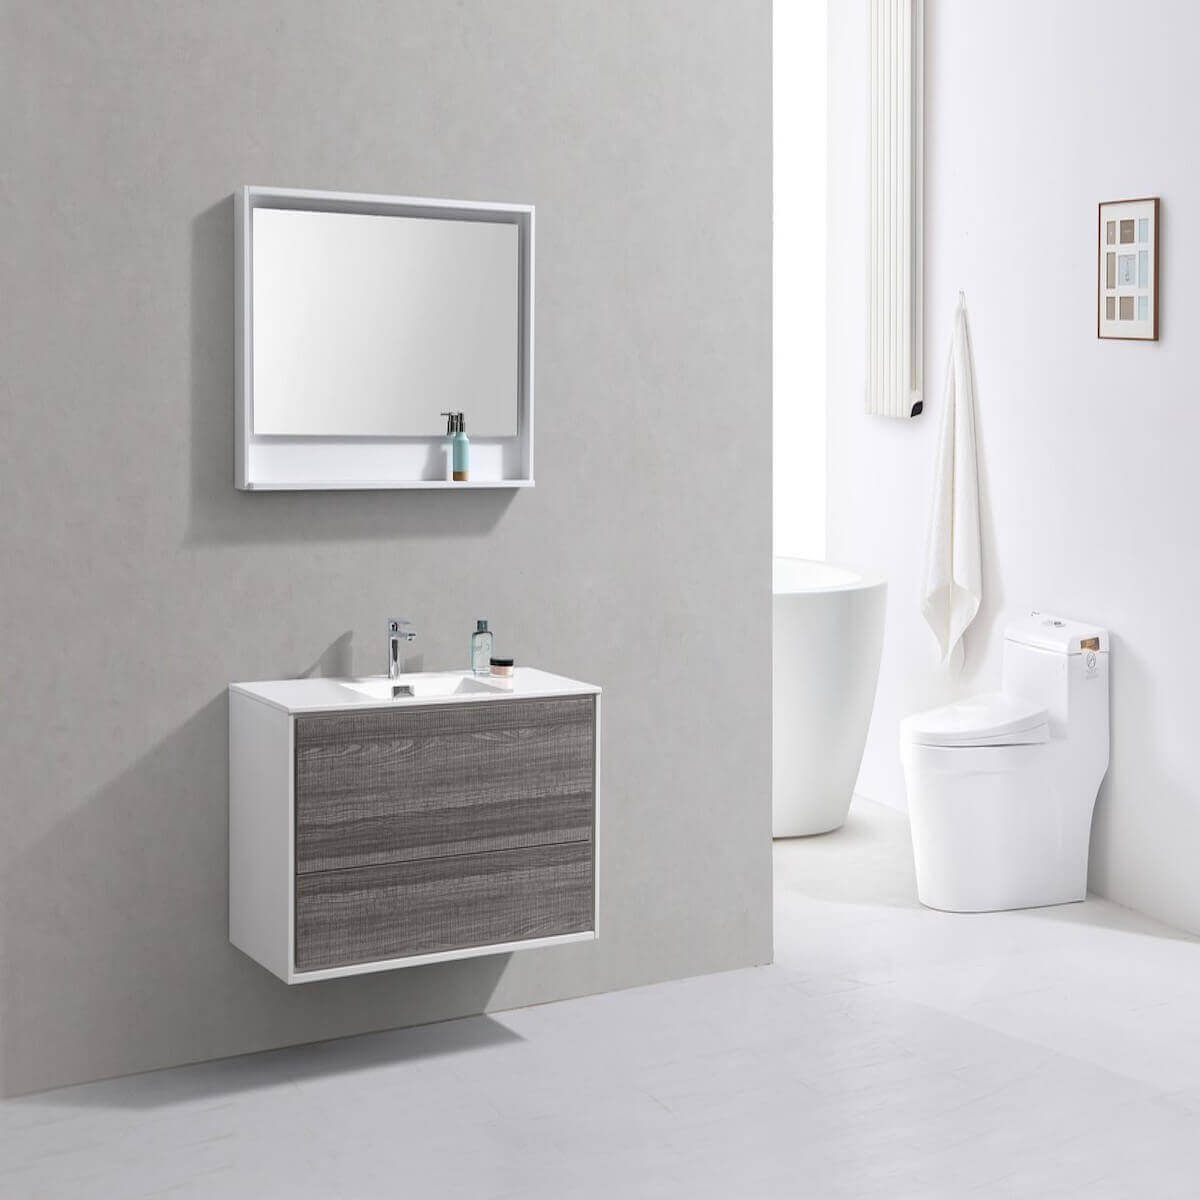 KubeBath DeLusso 48" Ash Gray Wall Mount Single Vanity DL48S-HGASH in Bathroom #finish_ash gray